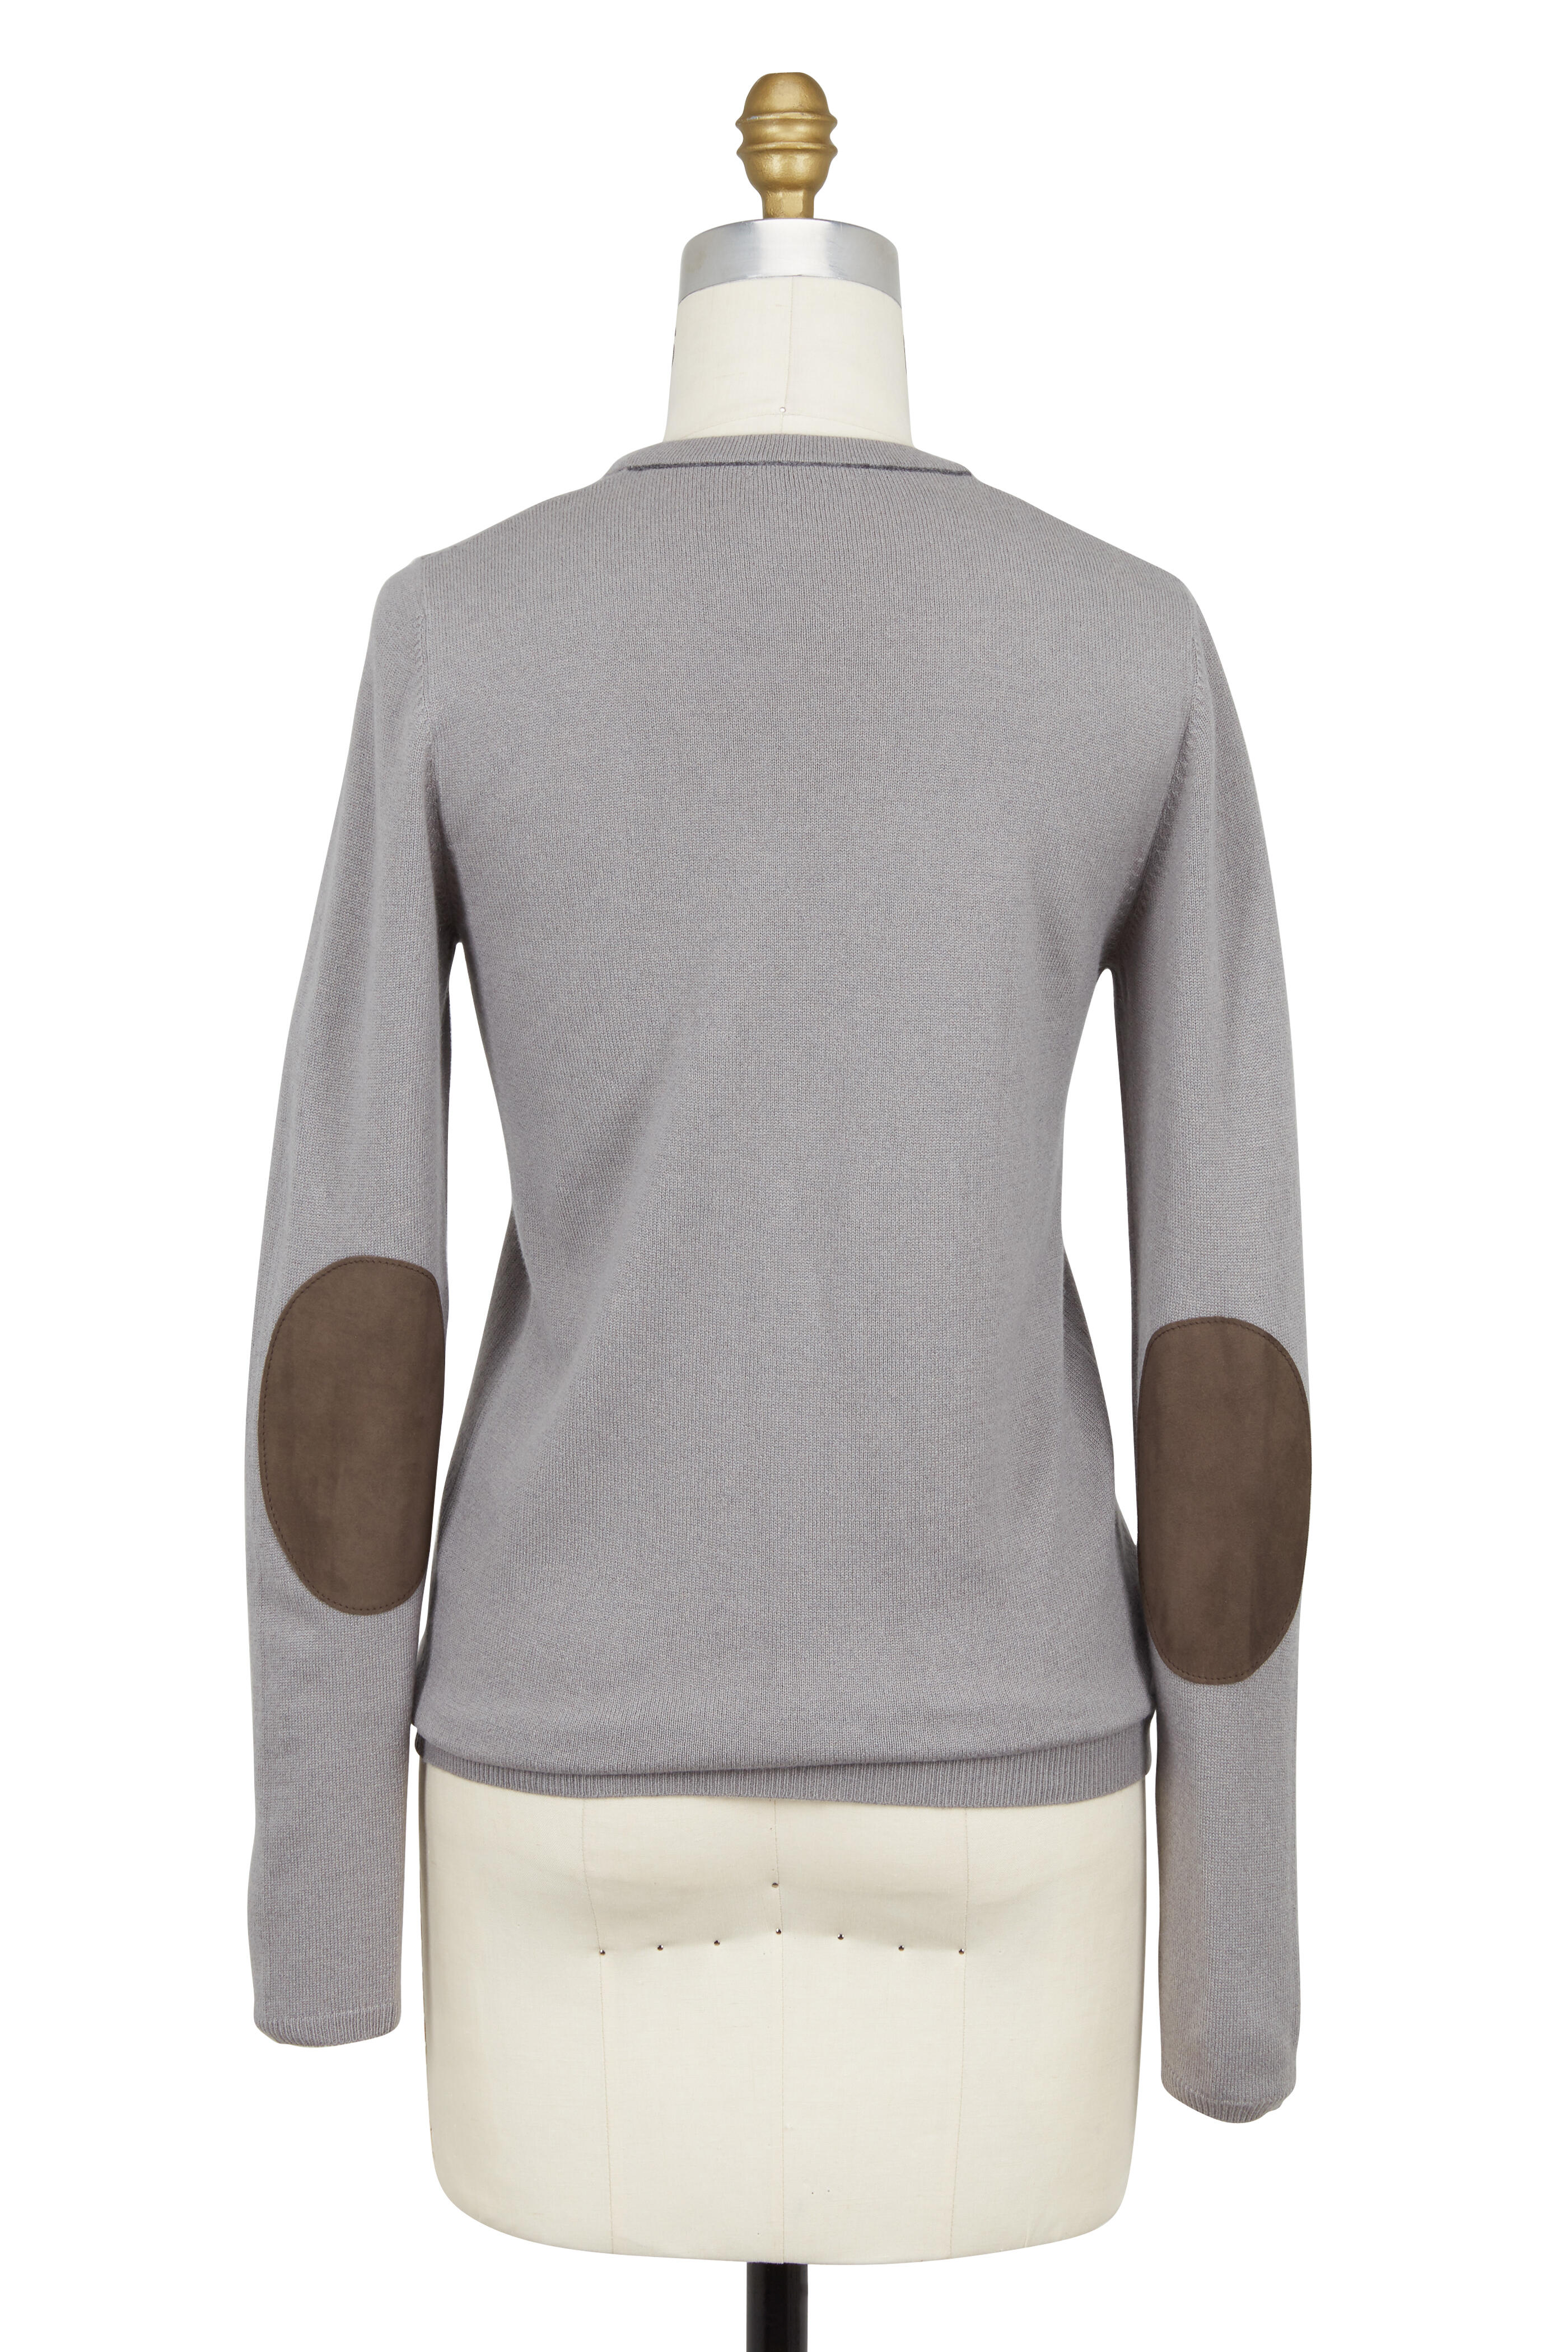 Brunello Cucinelli v-neck sweater - Grey